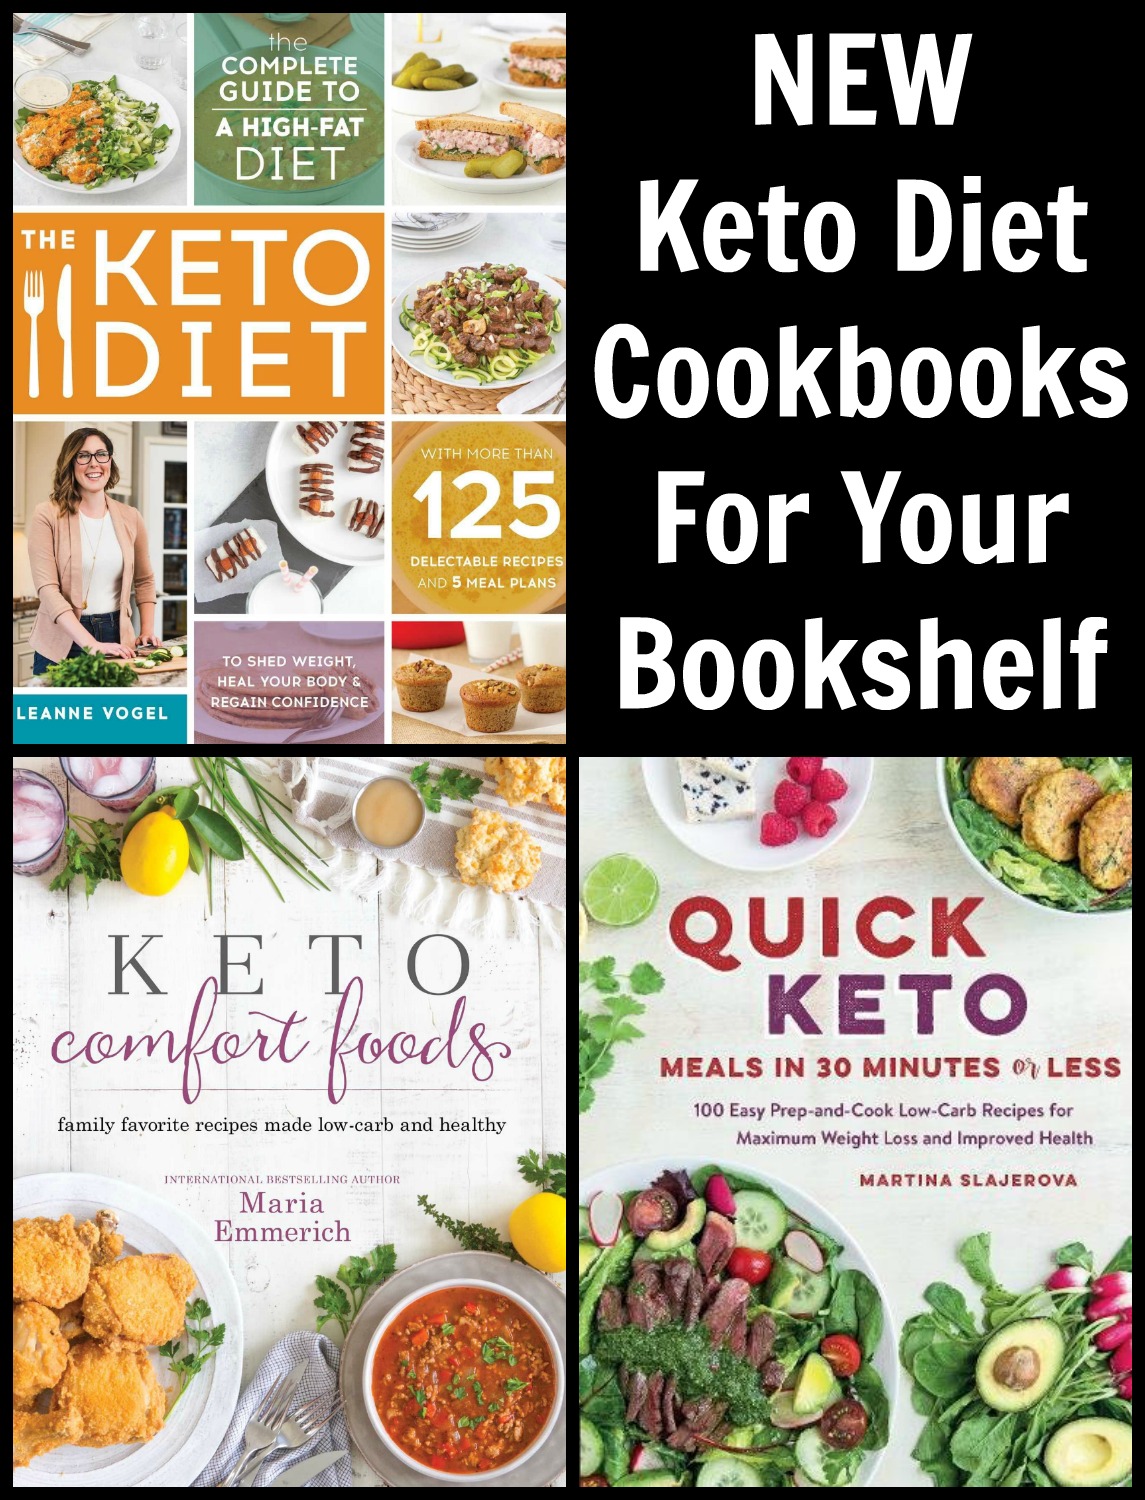 NEW Keto Cookbooks For Your Bookshelf - inspiration for your next Keto Cookbook from Maria Emmerich, Leanne Vogel and Martina Slajervo.